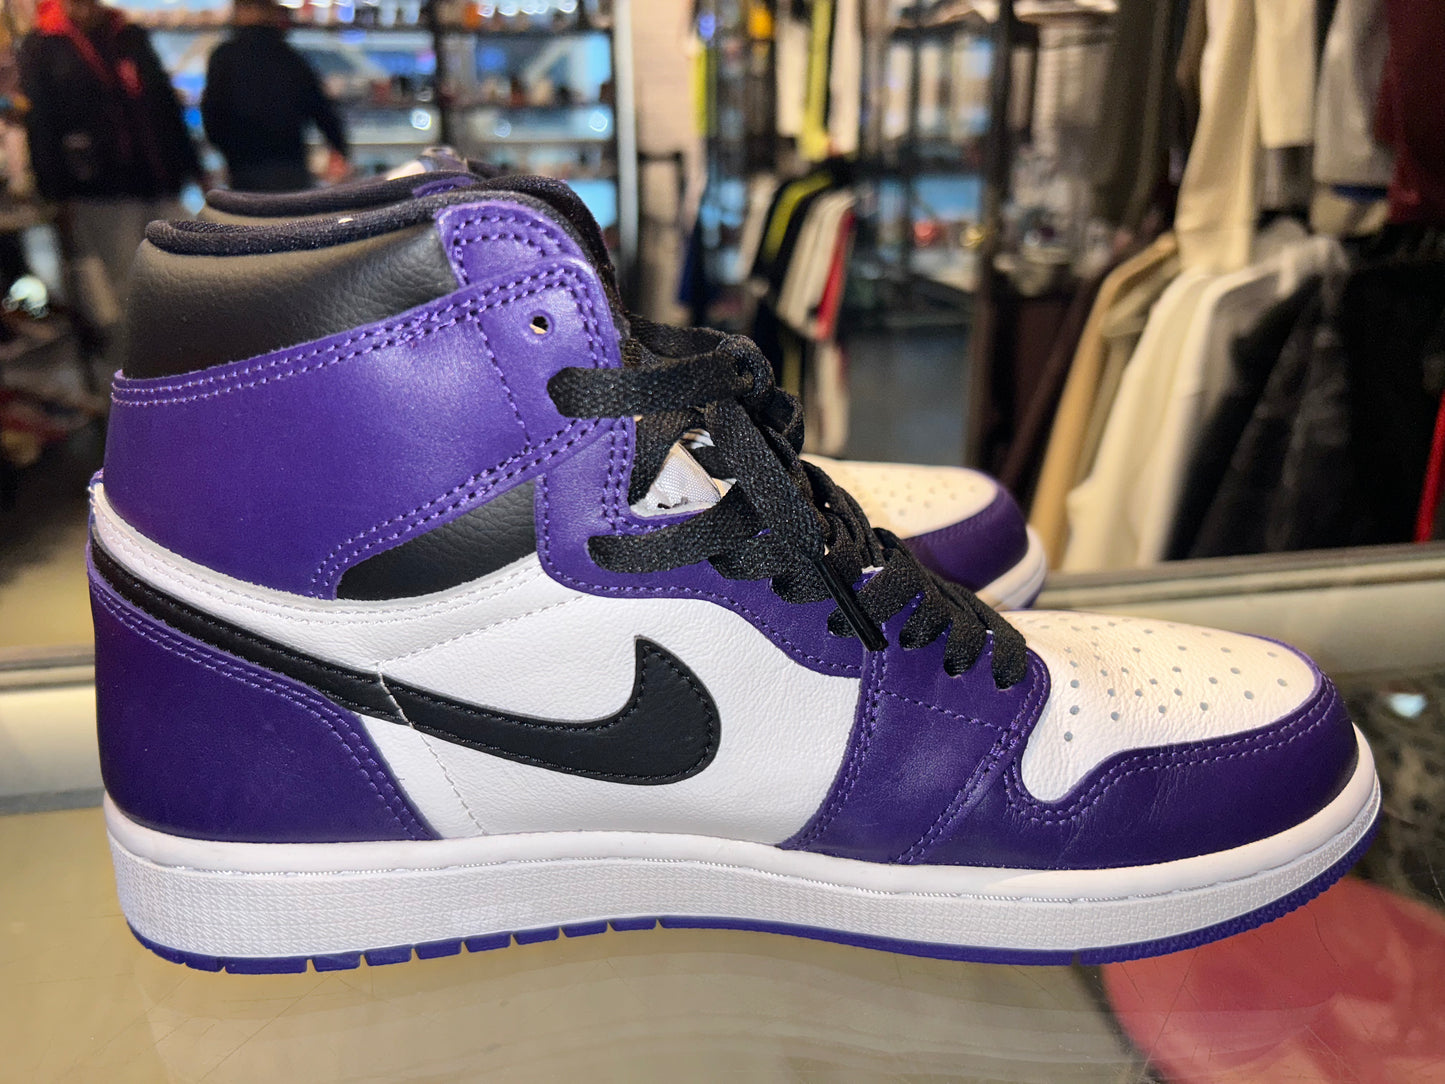 Size 9 Air Jordan 1 “Court Purple 2.0” Worn 1x (Mall)